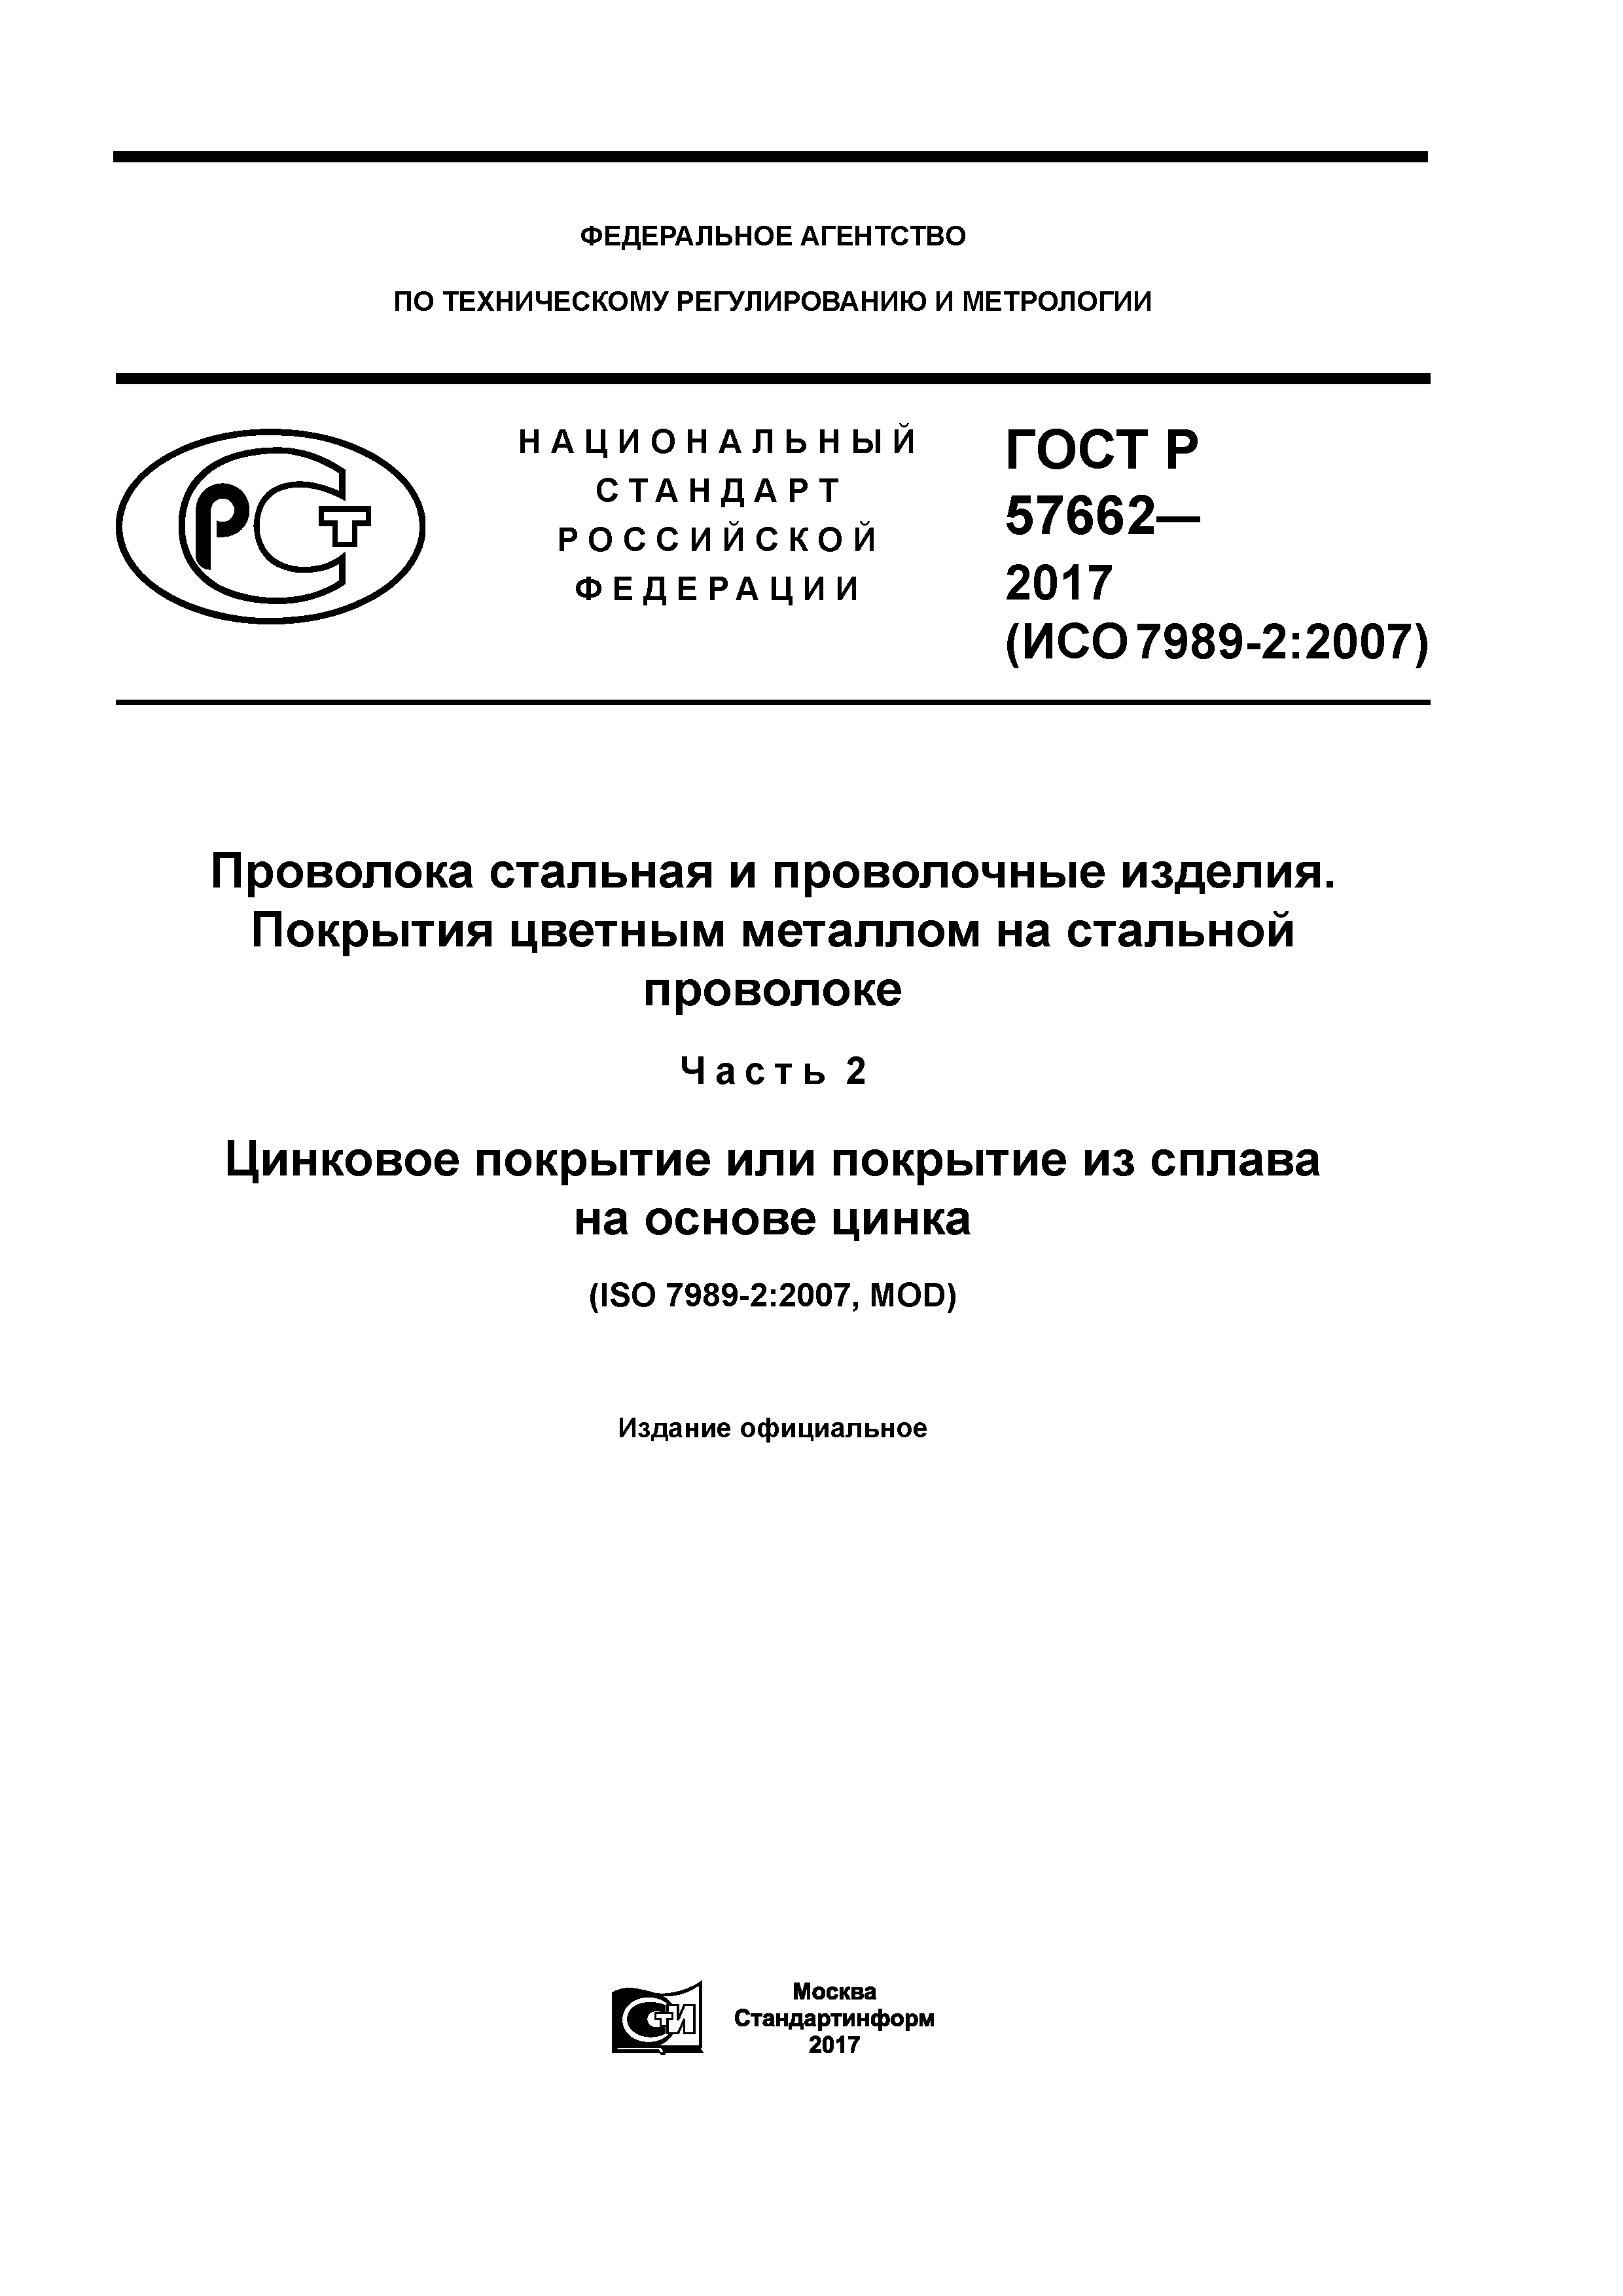 ГОСТ Р 57662-2017